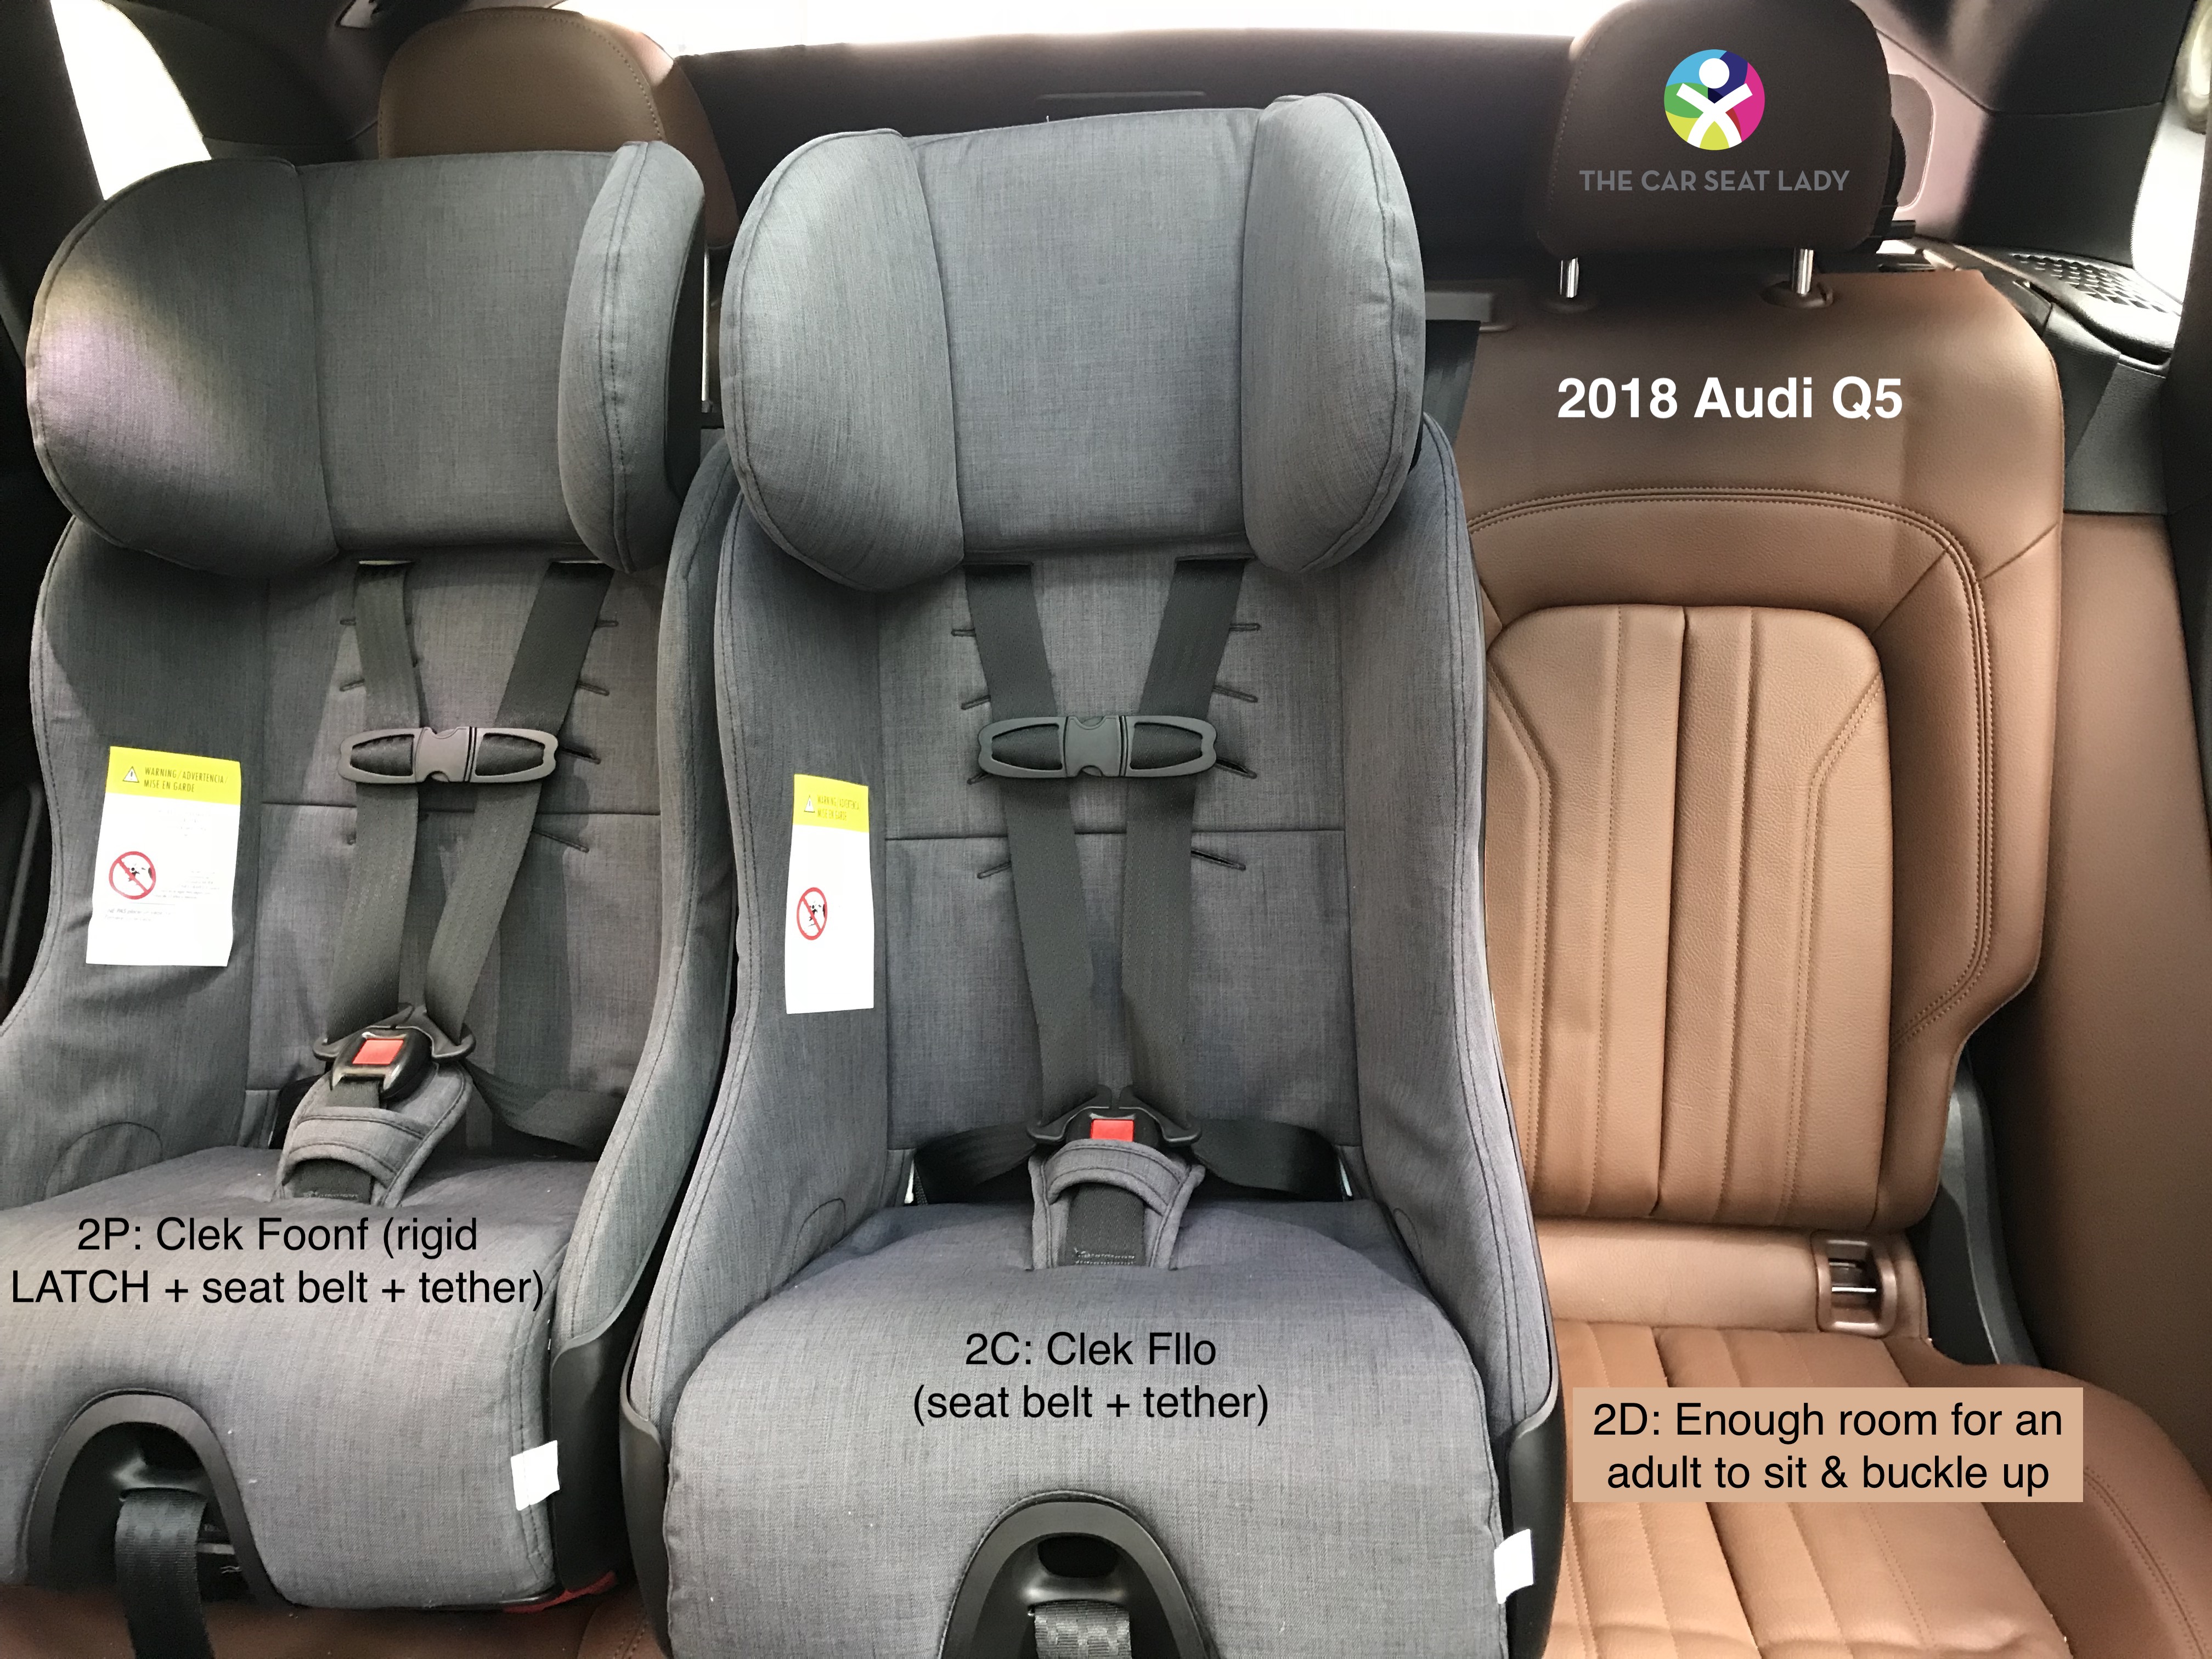 The Car Seat LadyAudi Q5 - The Car Seat Lady